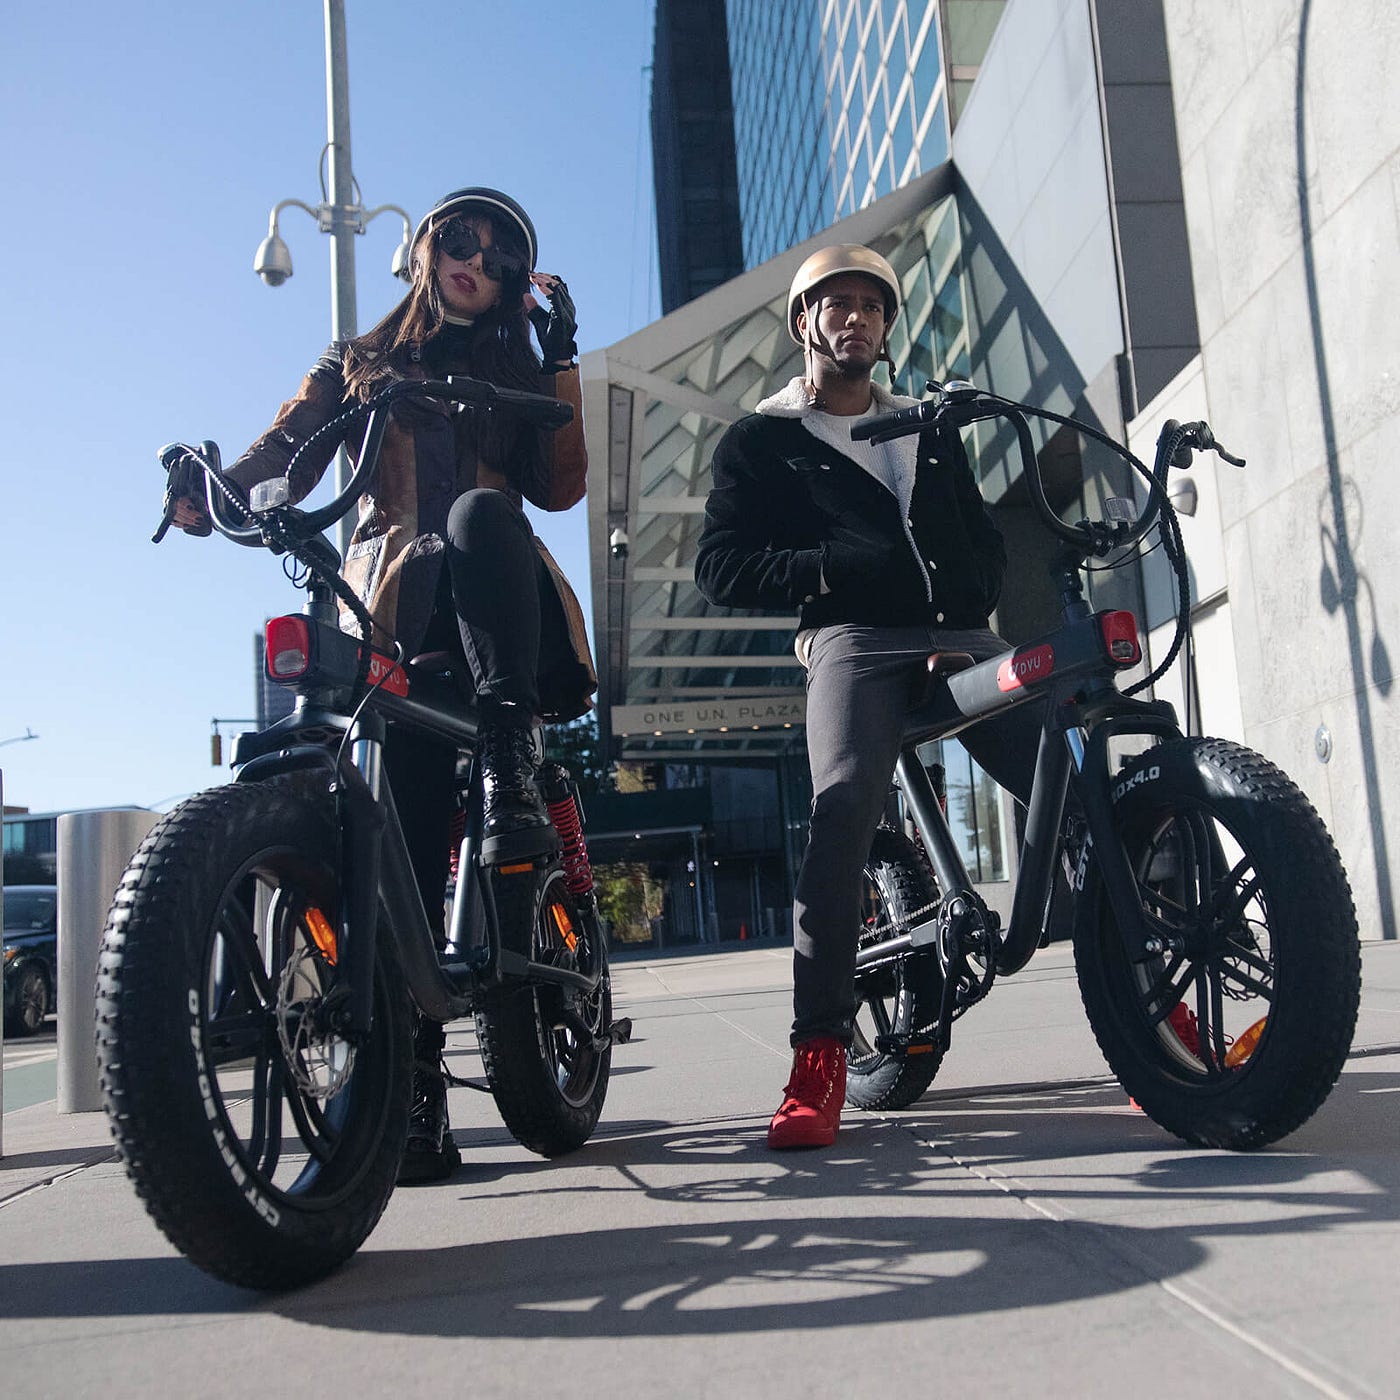 Shop Smart Insider Tips for Finding the Best E-Bike Deals by Ahomjialslam Sep, 2023 Medium